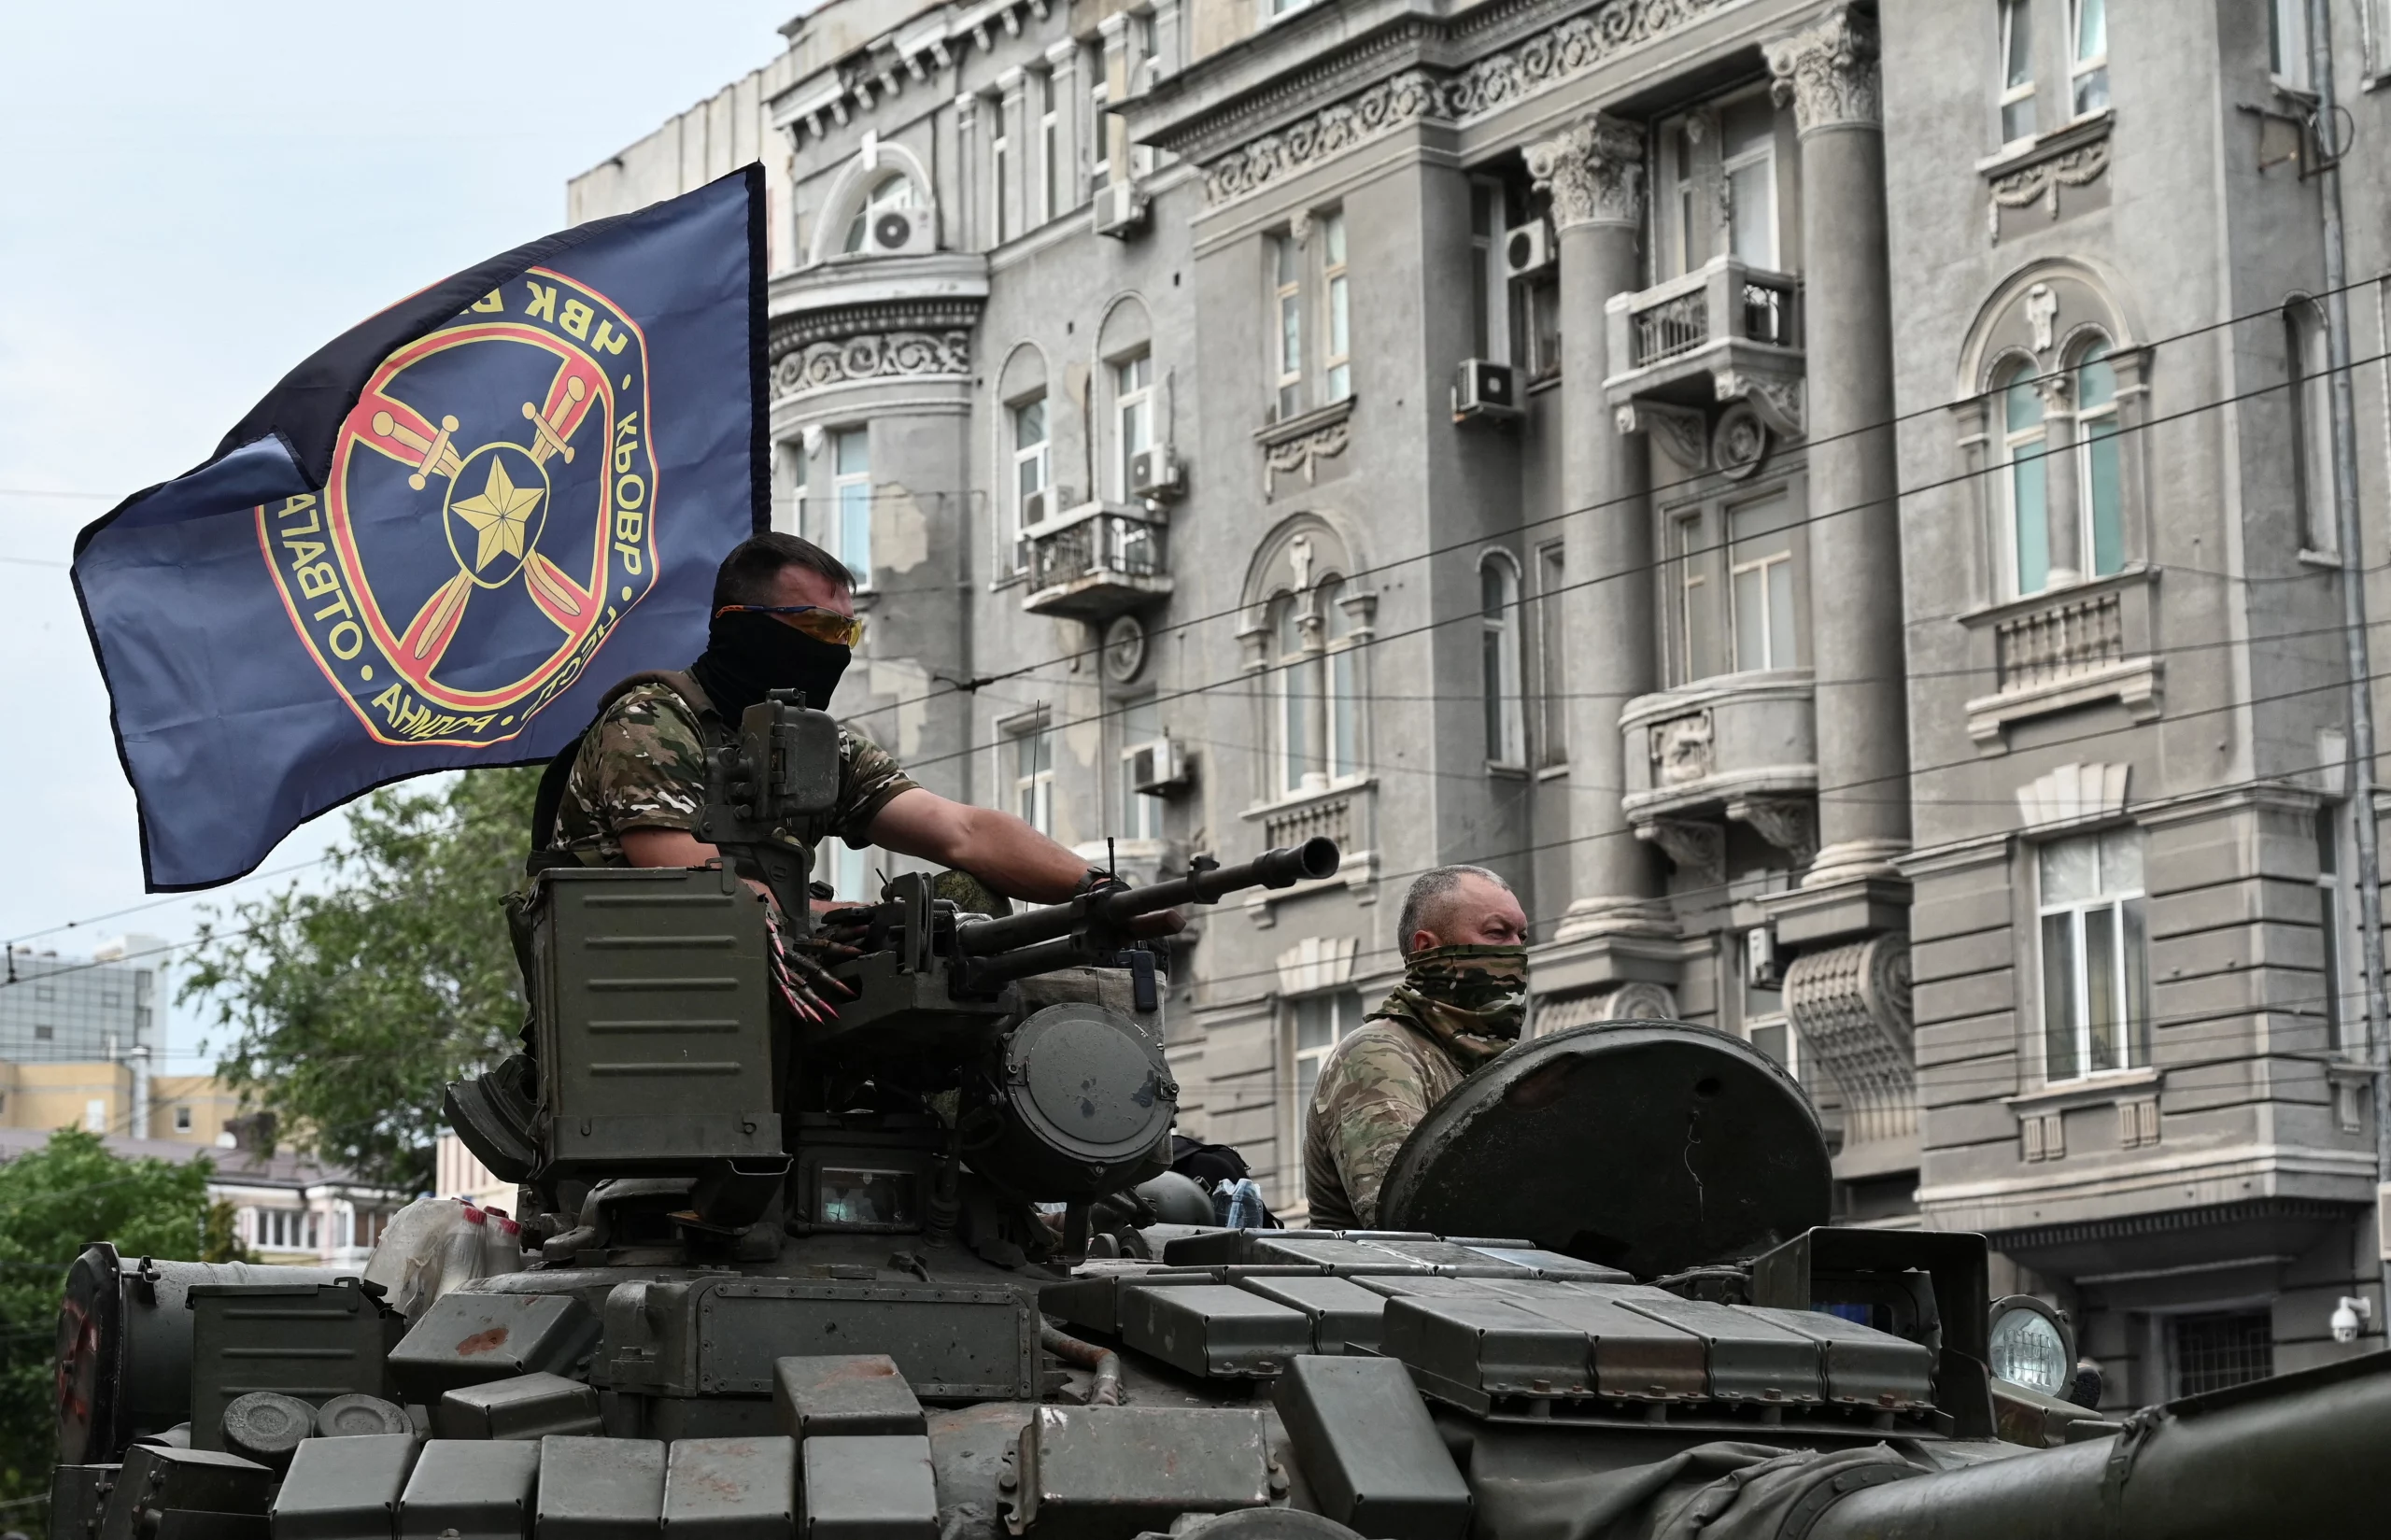 Russia warns Britain to avoid involvement in Ukraine crisis